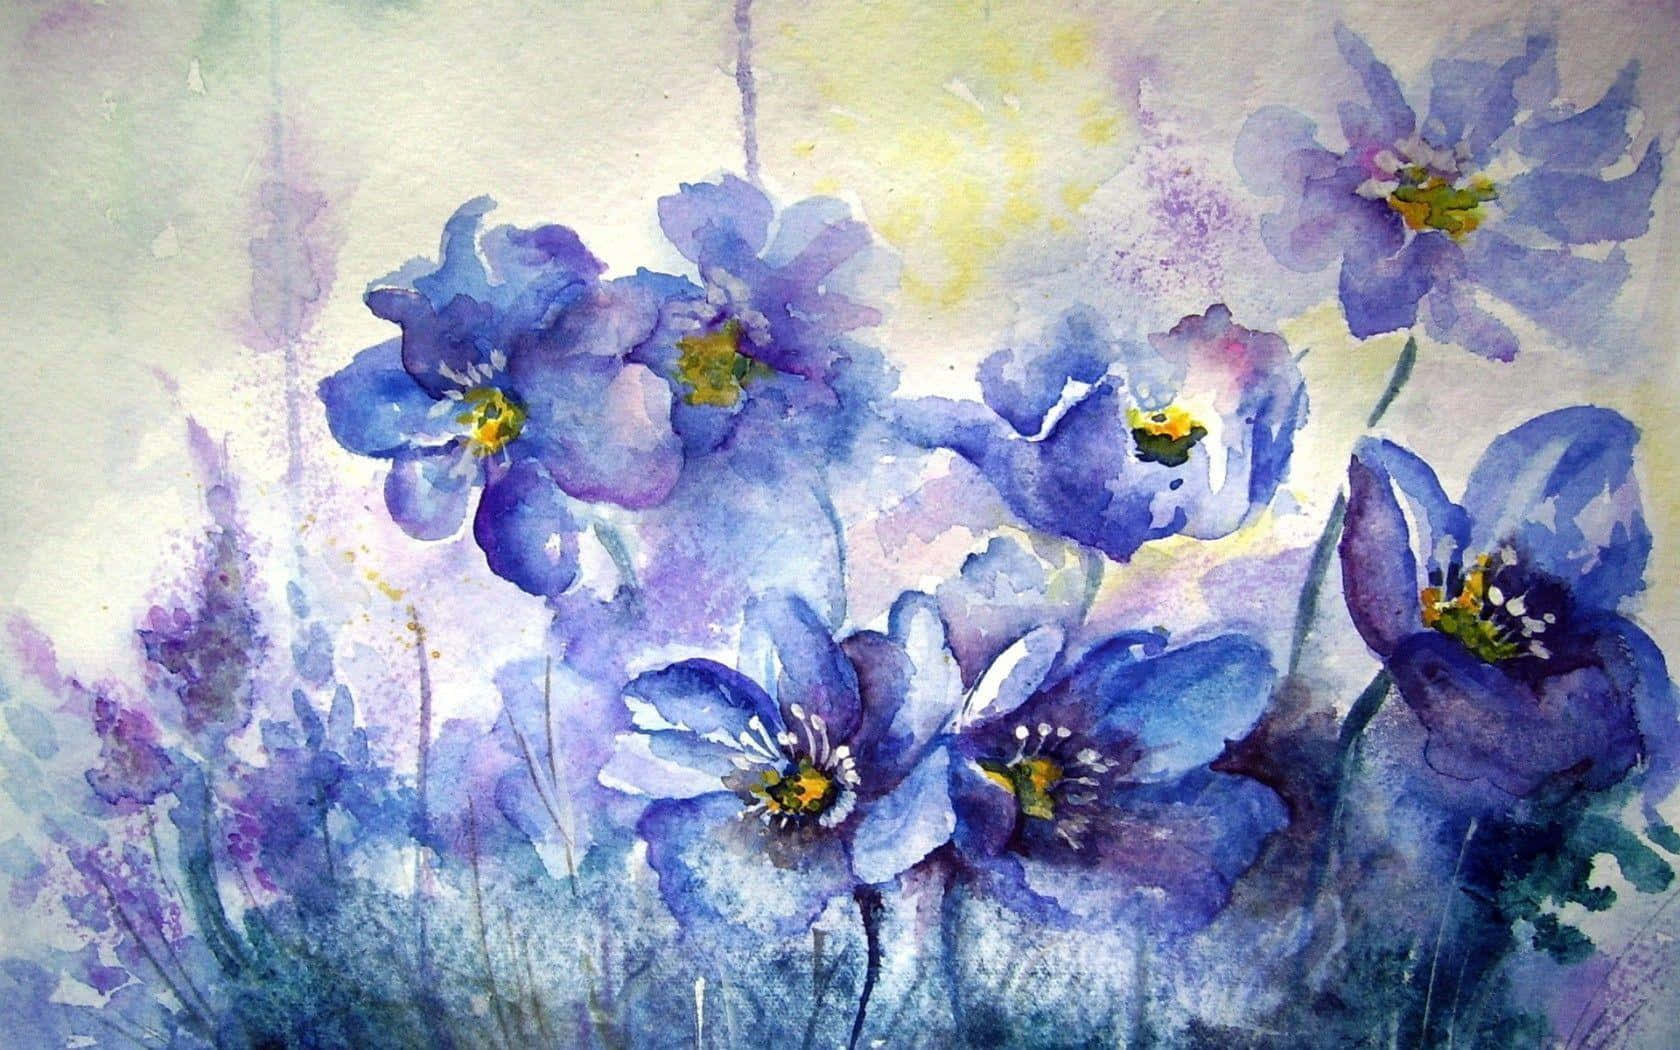 Imagende Pintura De Acuarela De Una Flor Púrpura